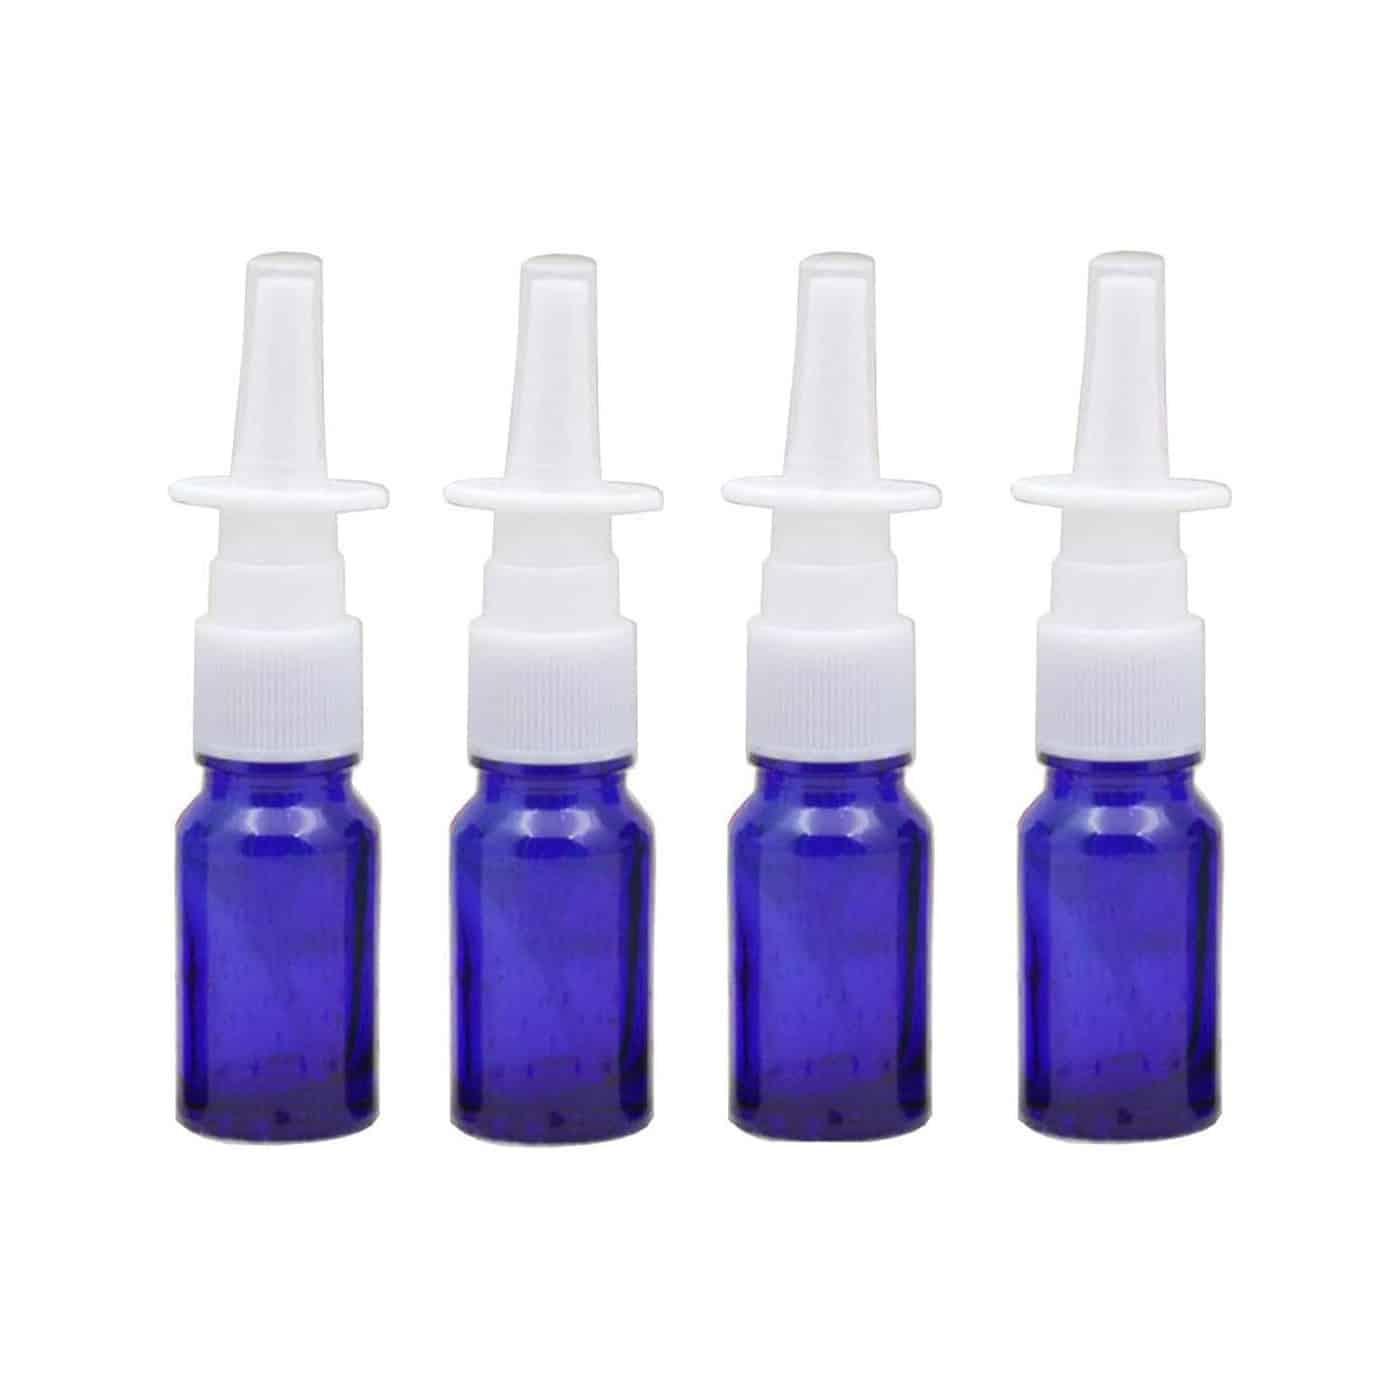 Empty Refillable Glass Nasal Spray Bottles